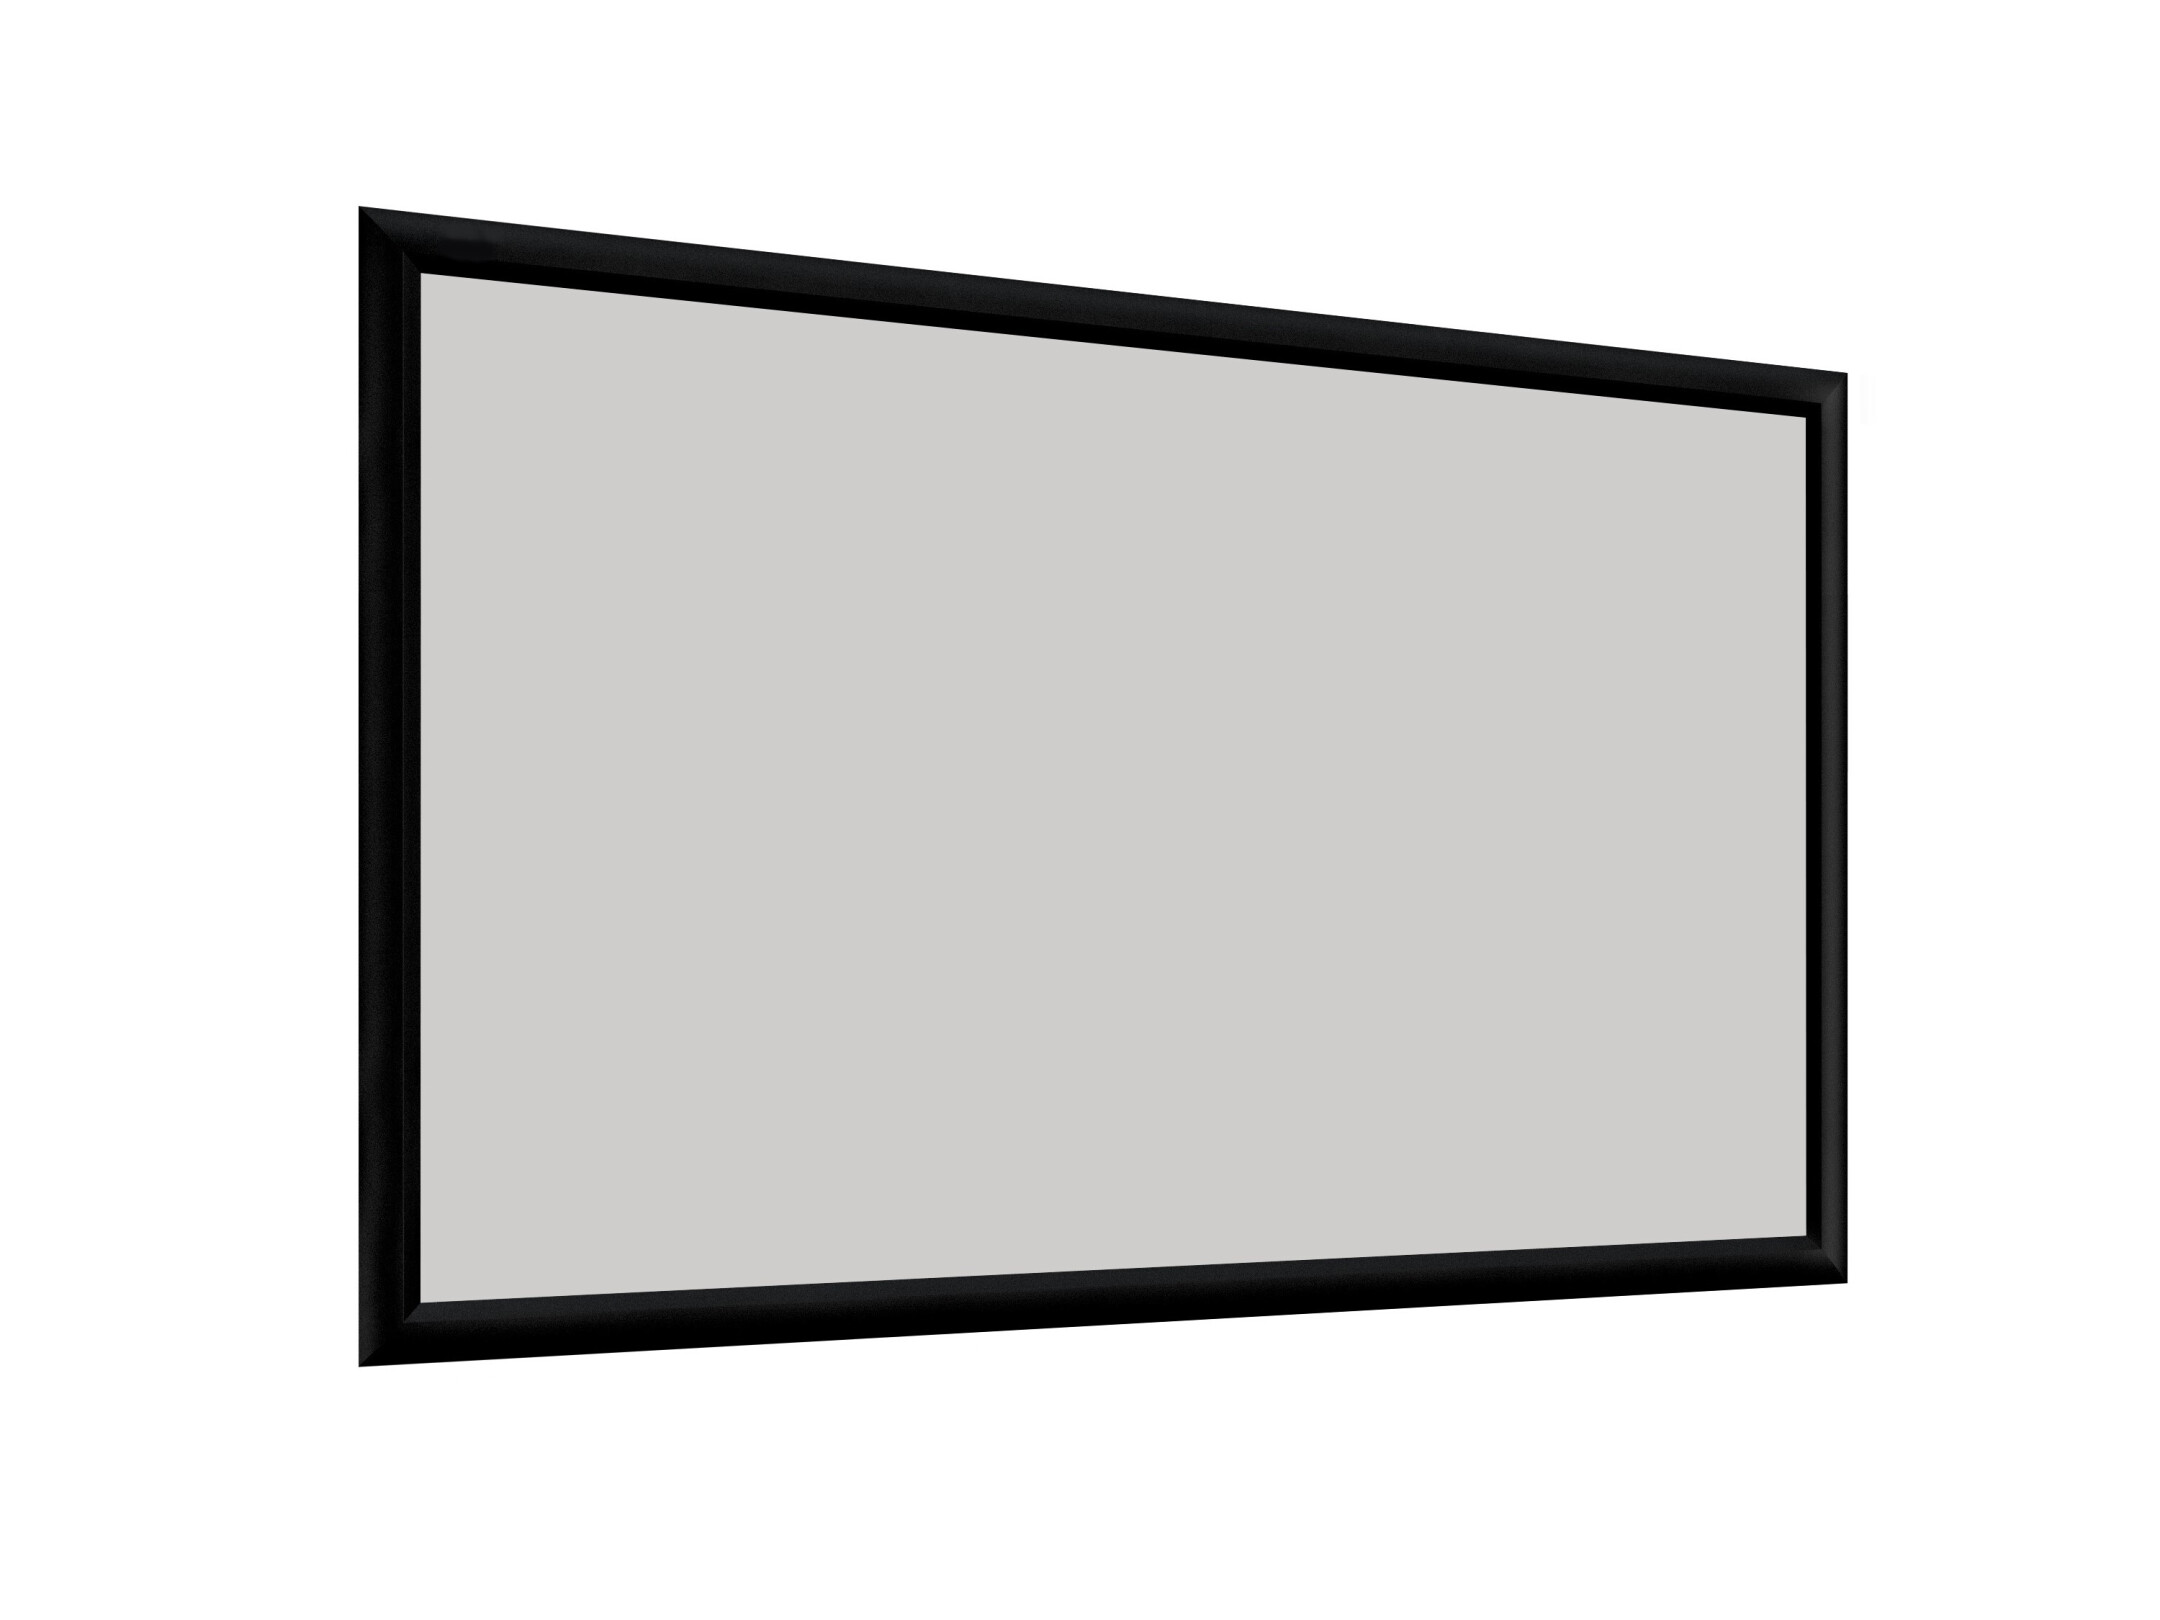 DELUXX-Cinema-Hoogcontrast-frame-projectiescherm-265-x-149-cm-120-DAYVISION-ALR